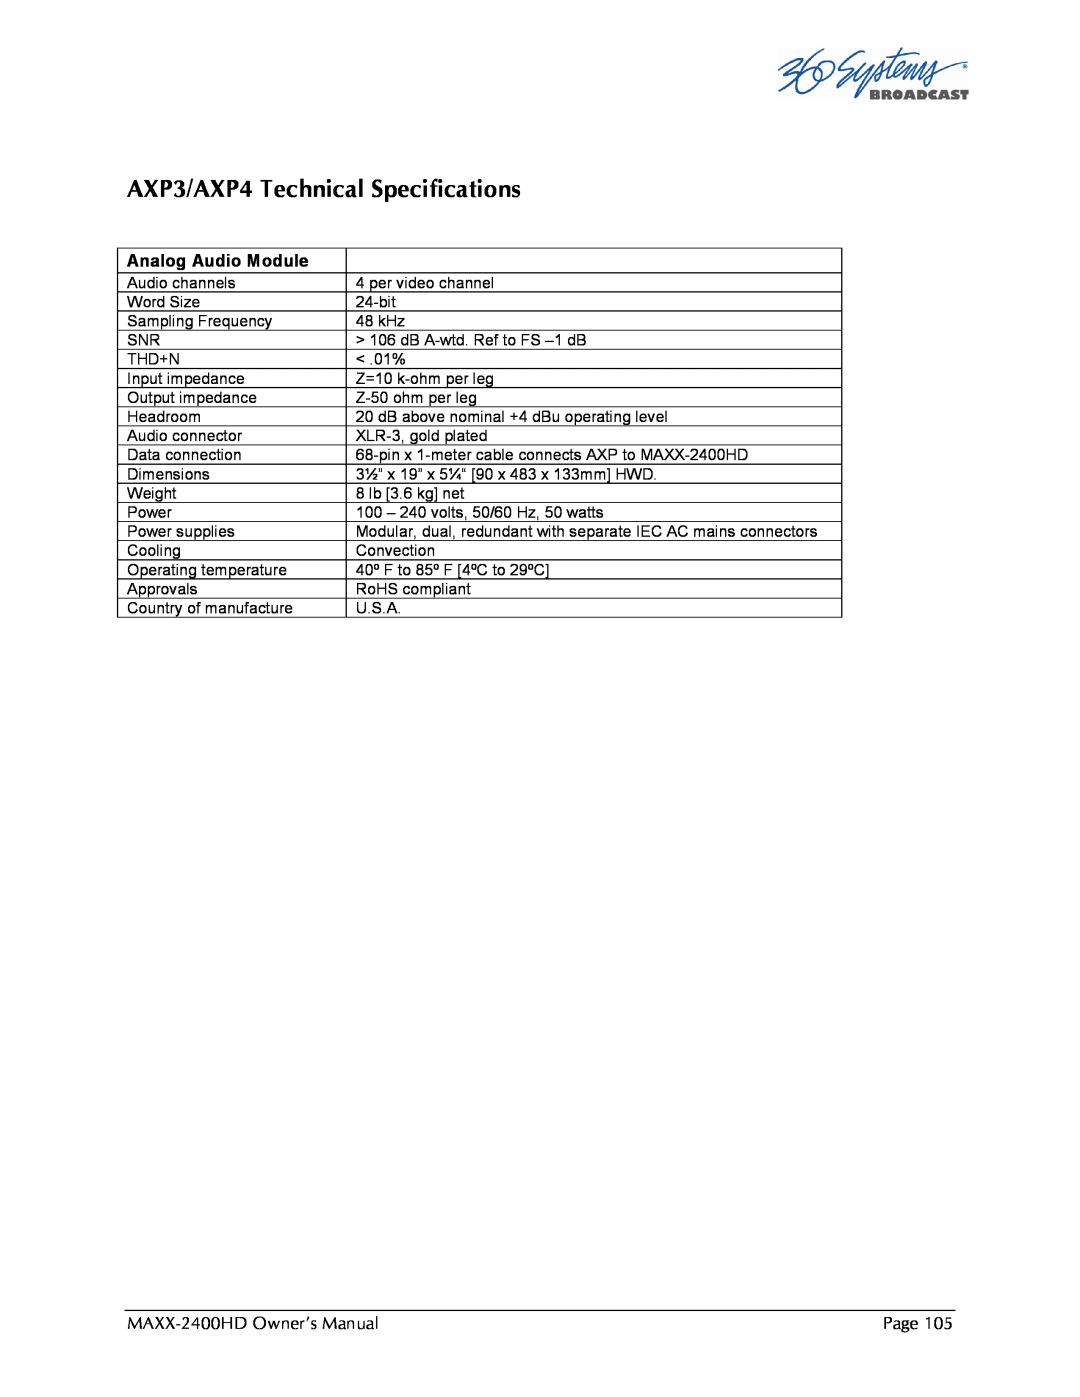 Maxxsonics manual AXP3/AXP4 Technical Specifications, Analog Audio Module, MAXX-2400HDOwner’s Manual 